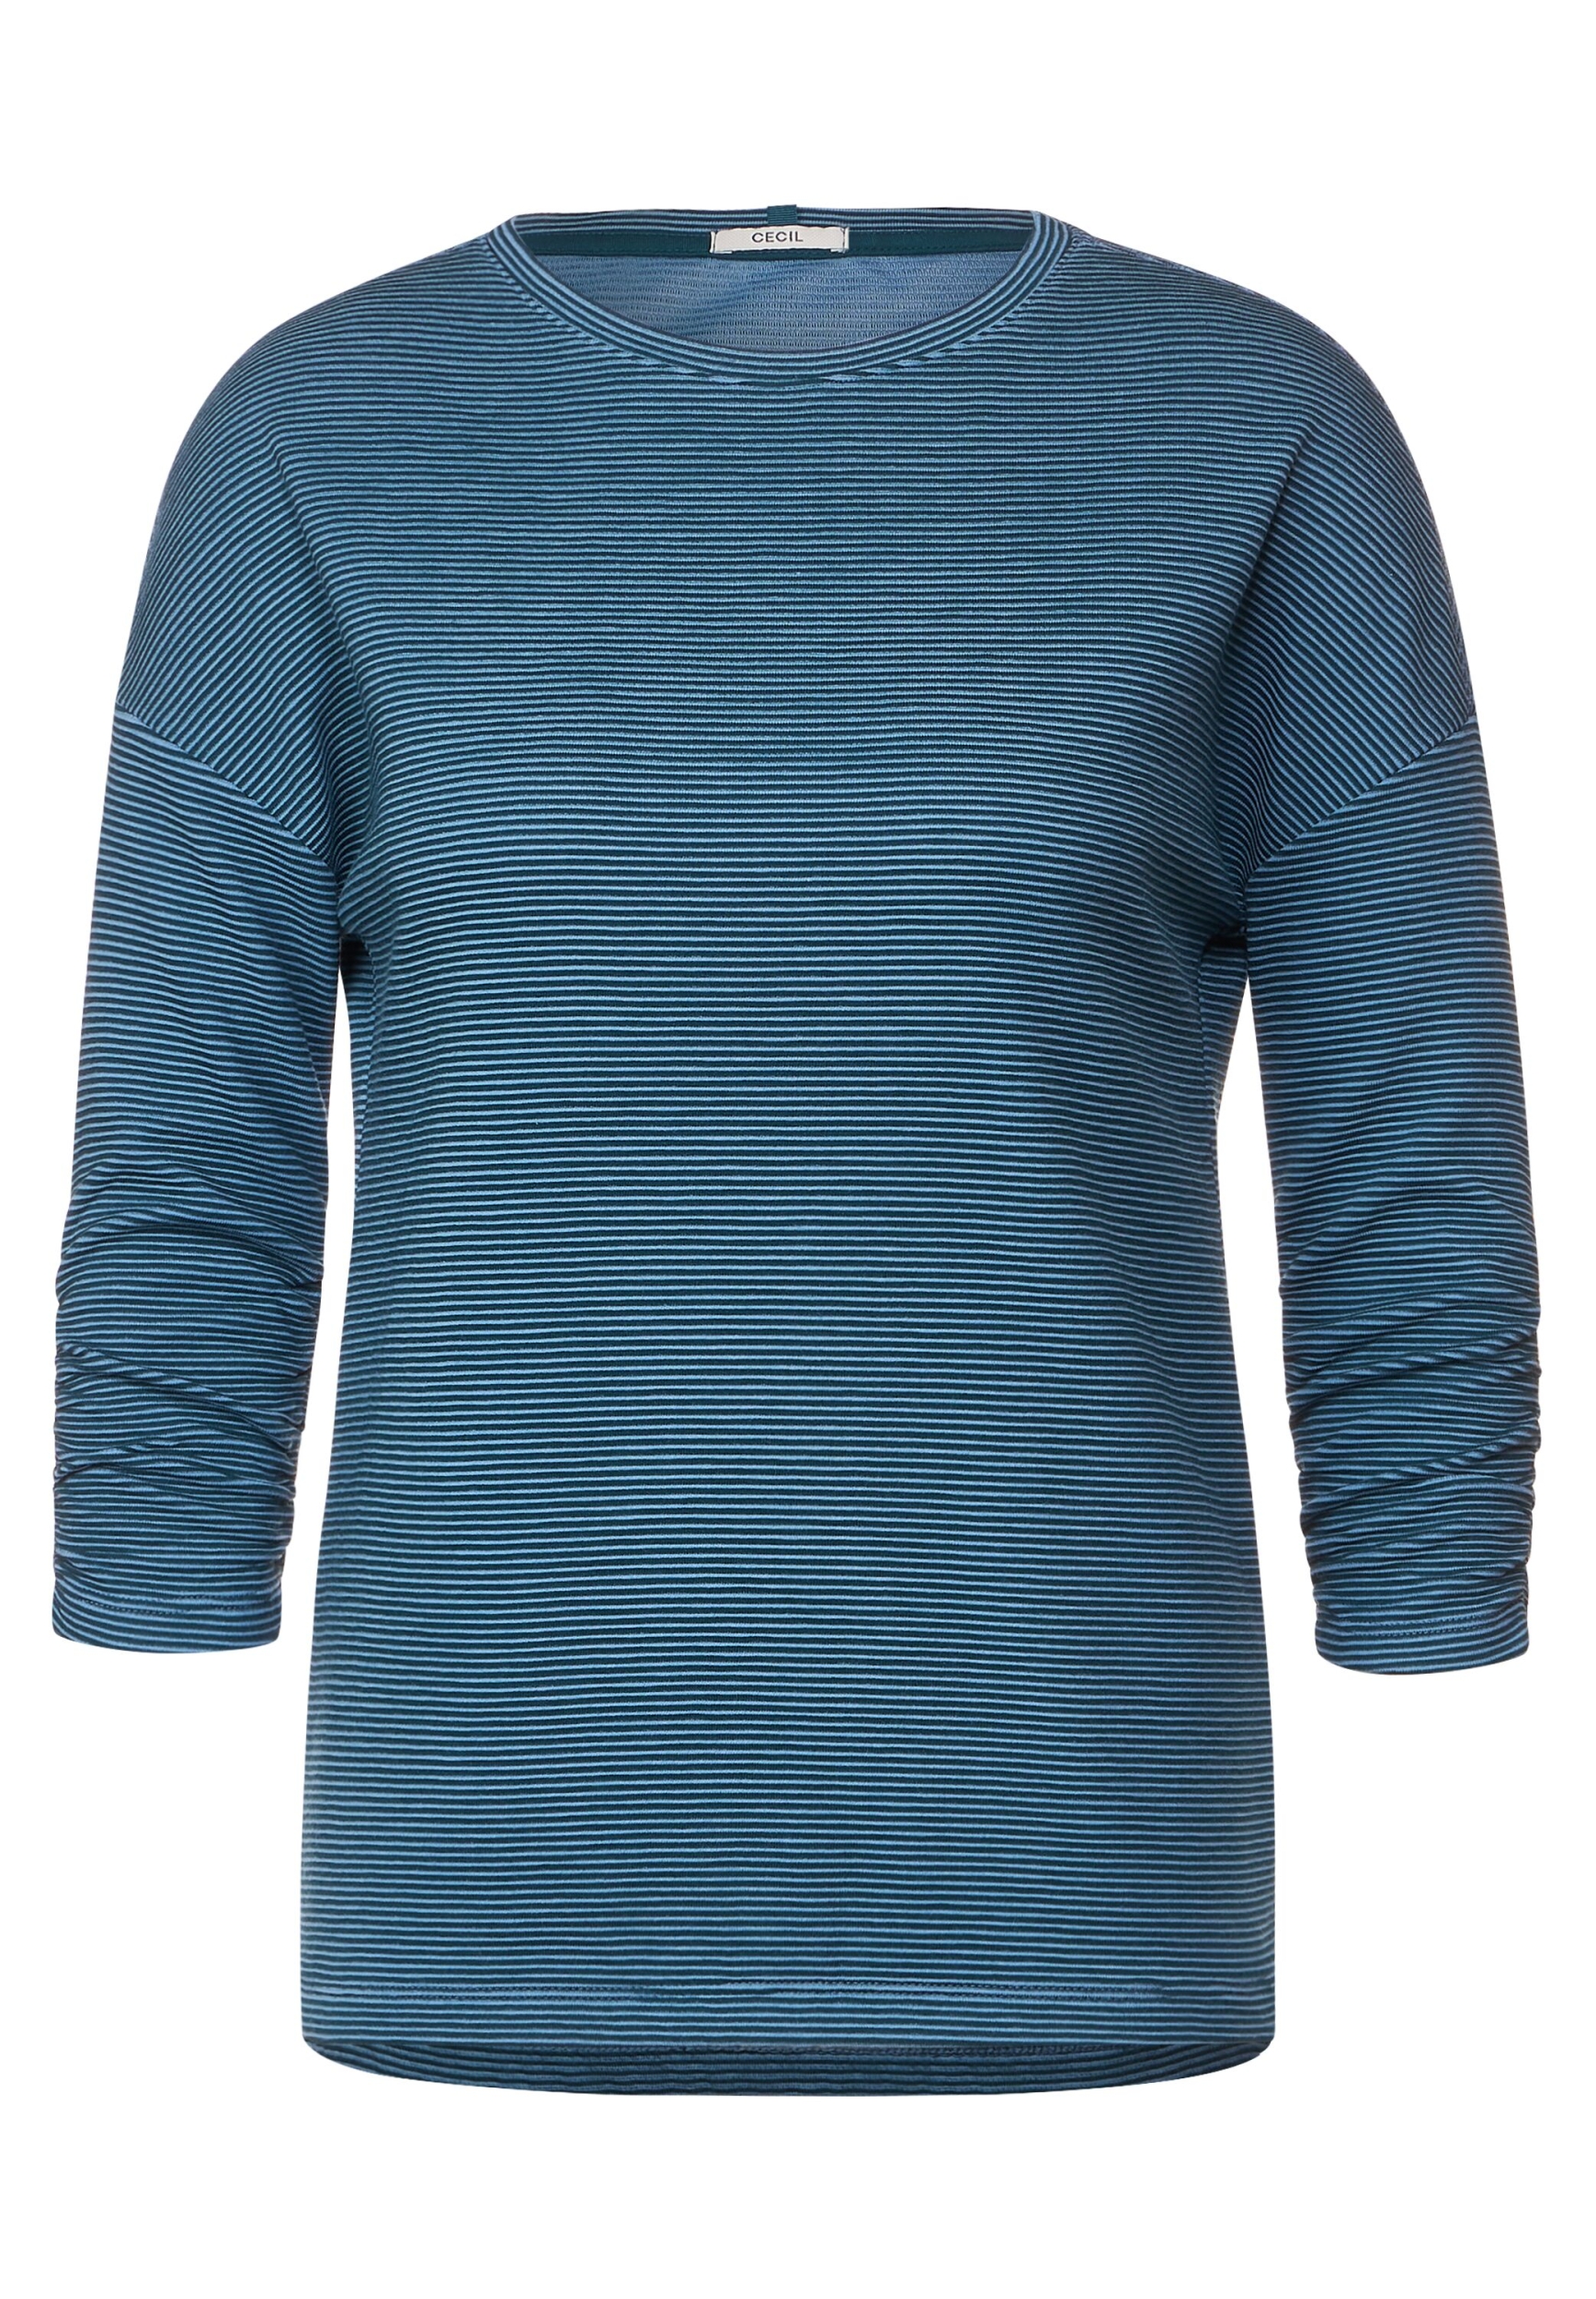 A319585-14510-40 | | linen blue shirt LTD v-neck splash QR | look 40